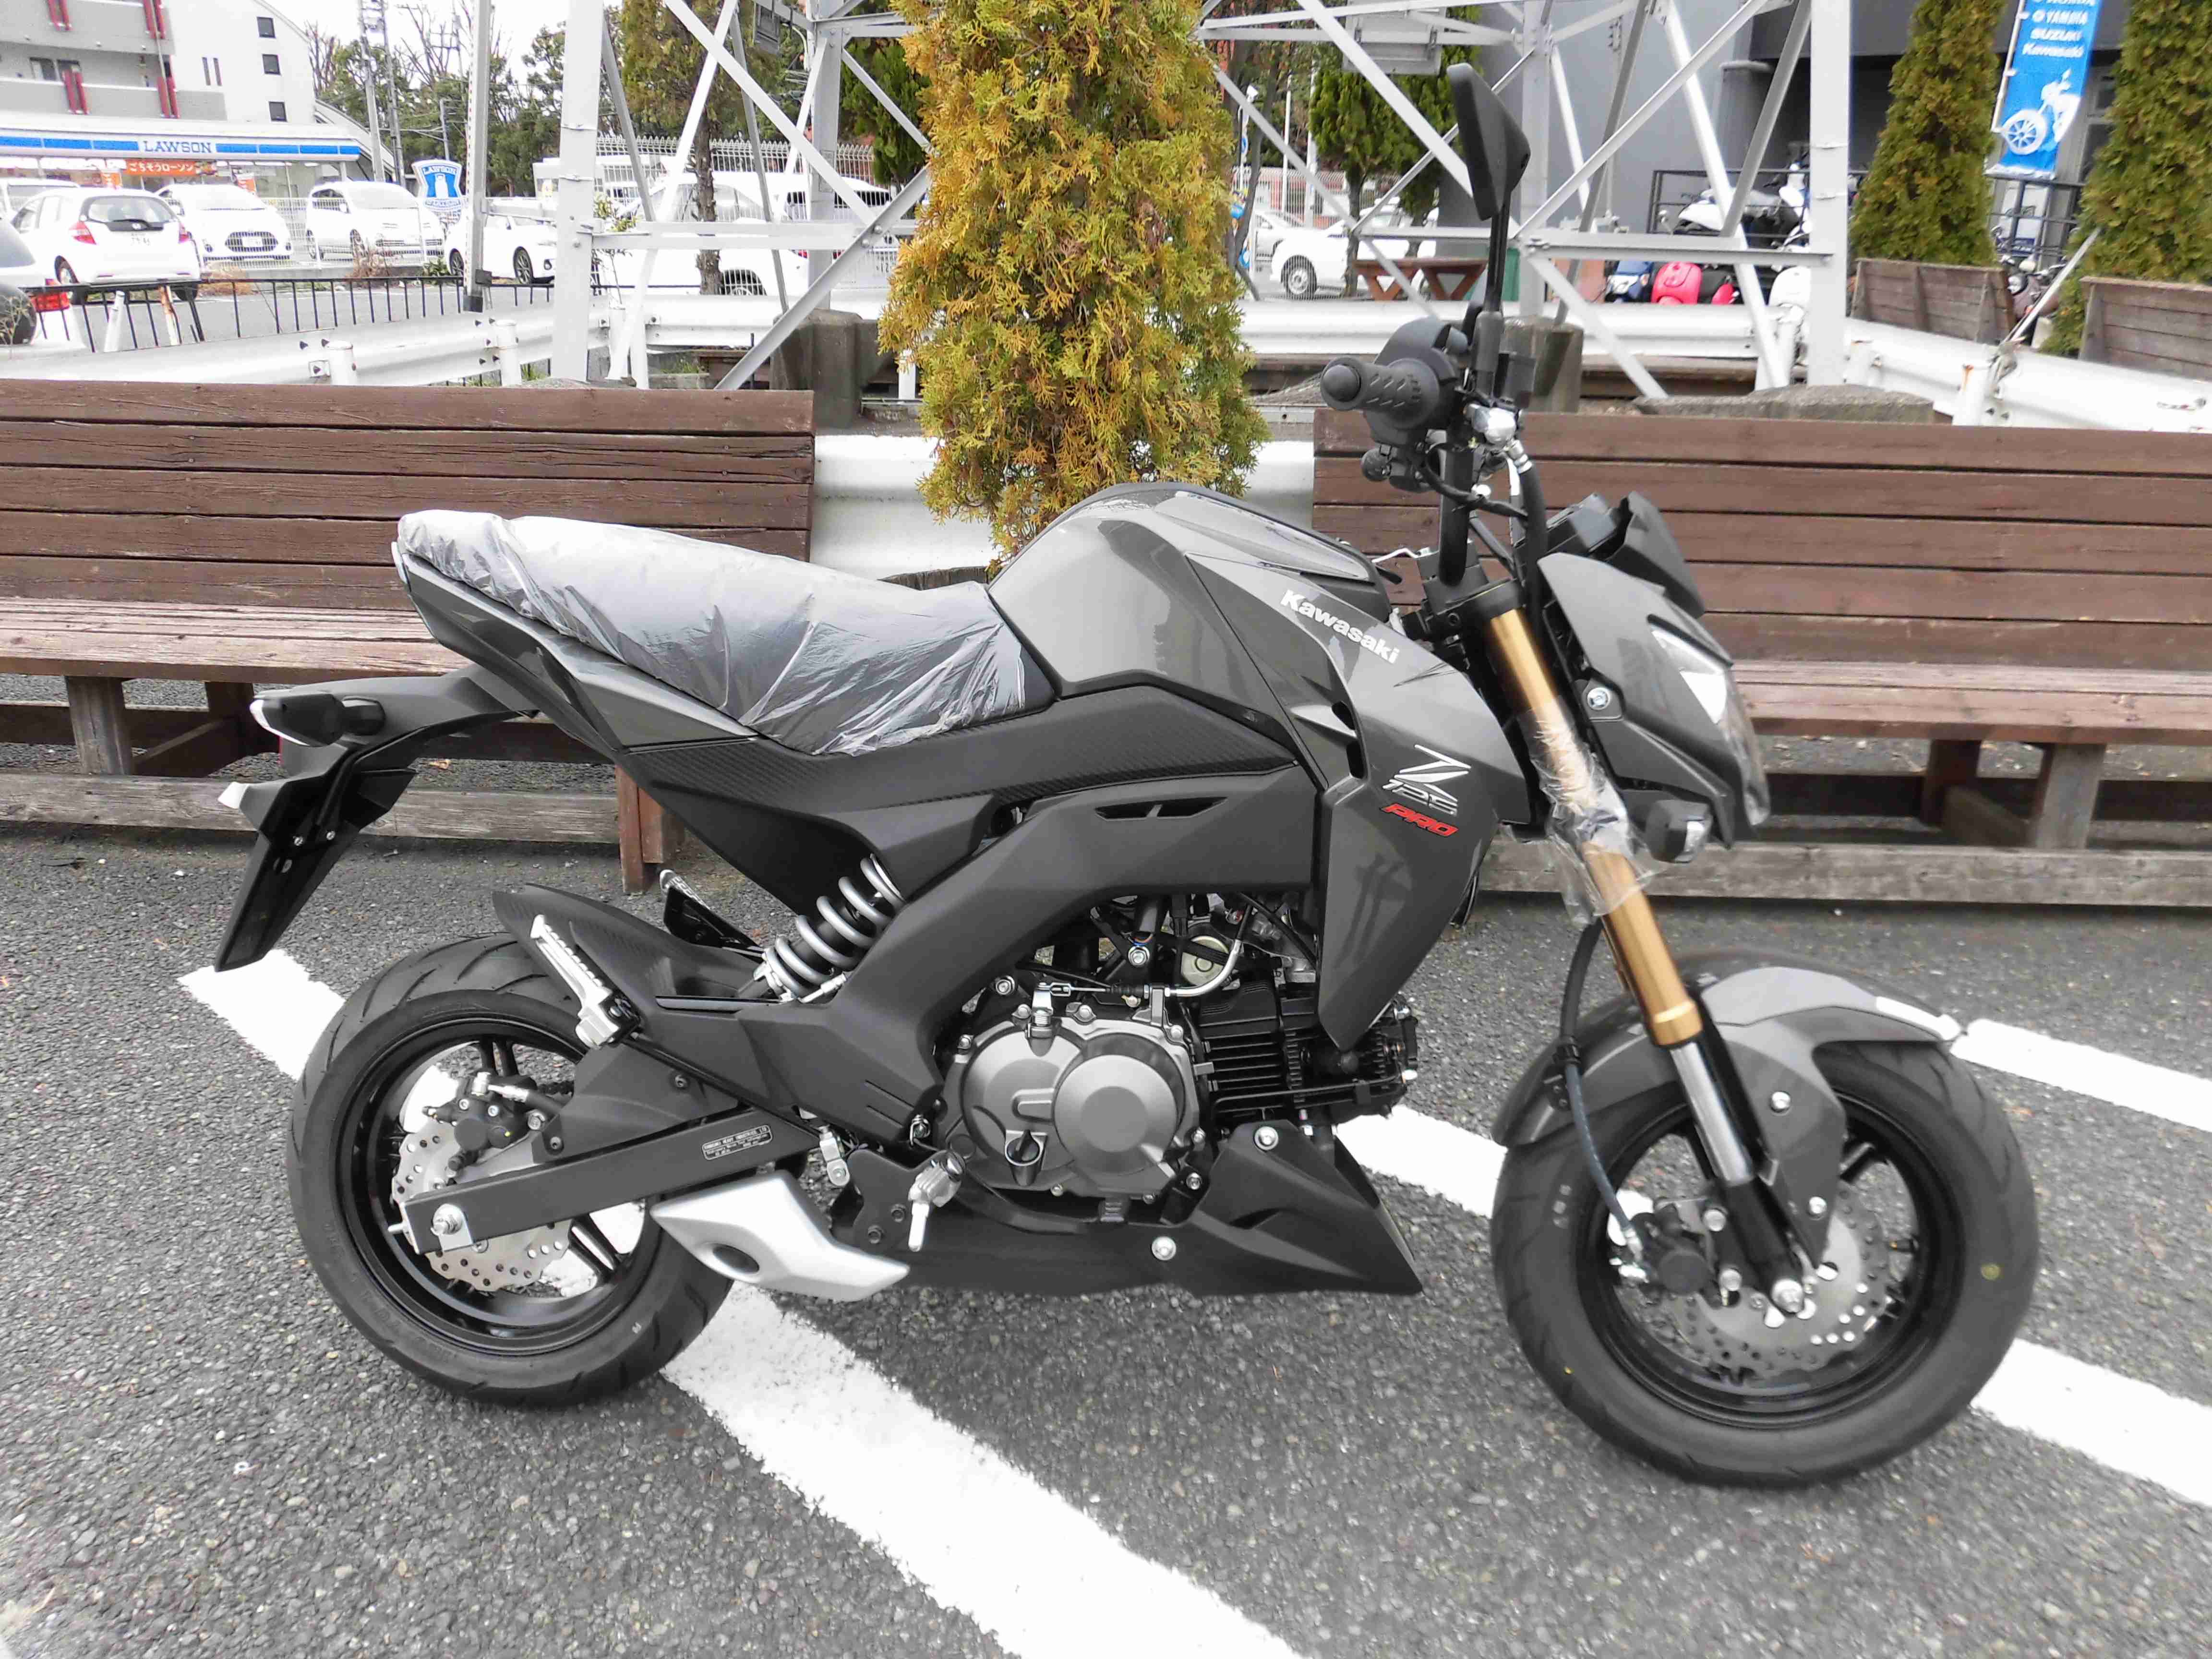 50cc 125ccマニュアルバイク新車もございます 最新情報 U Media ユーメディア 中古バイク 新車バイク 探しの決定版 神奈川 東京でバイク探すならユーメディア